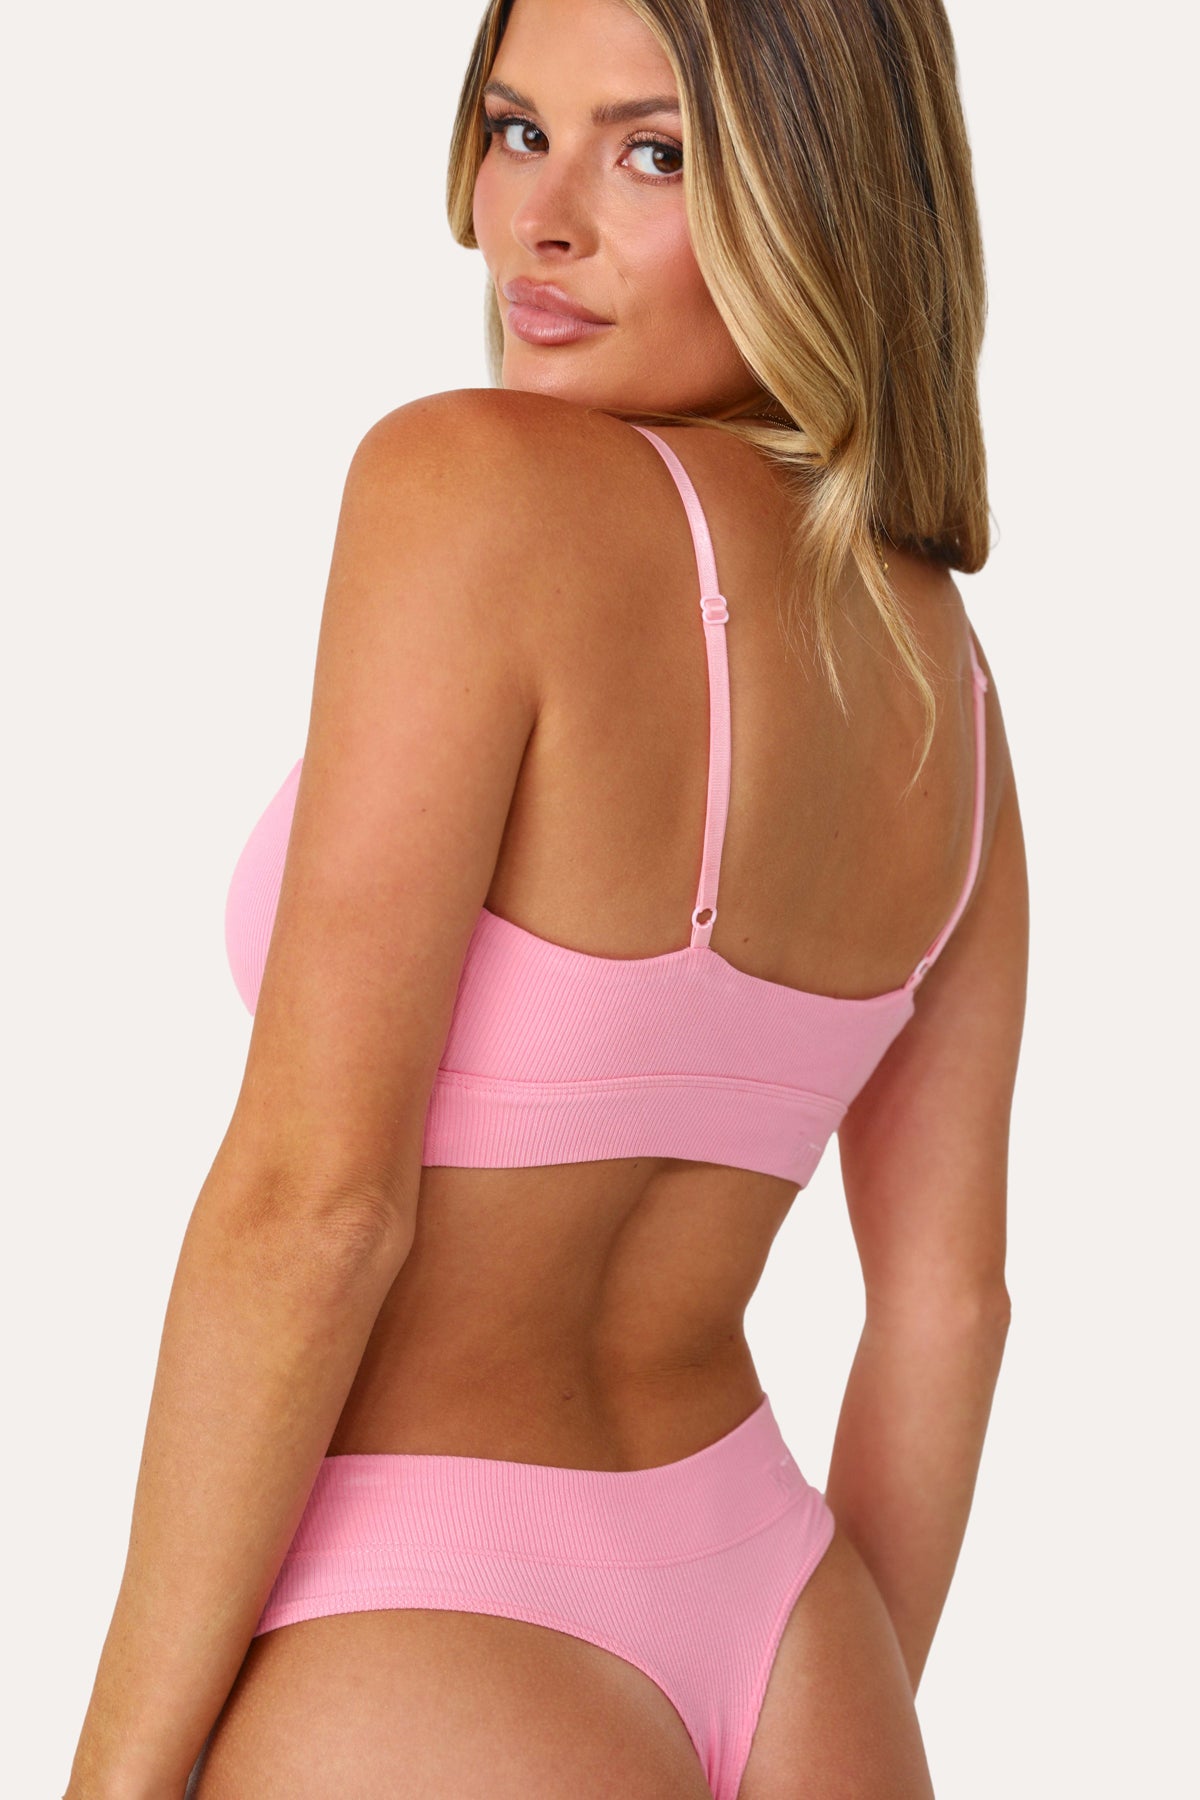 Model wearing the Bubble Gum Pink basics Bralette